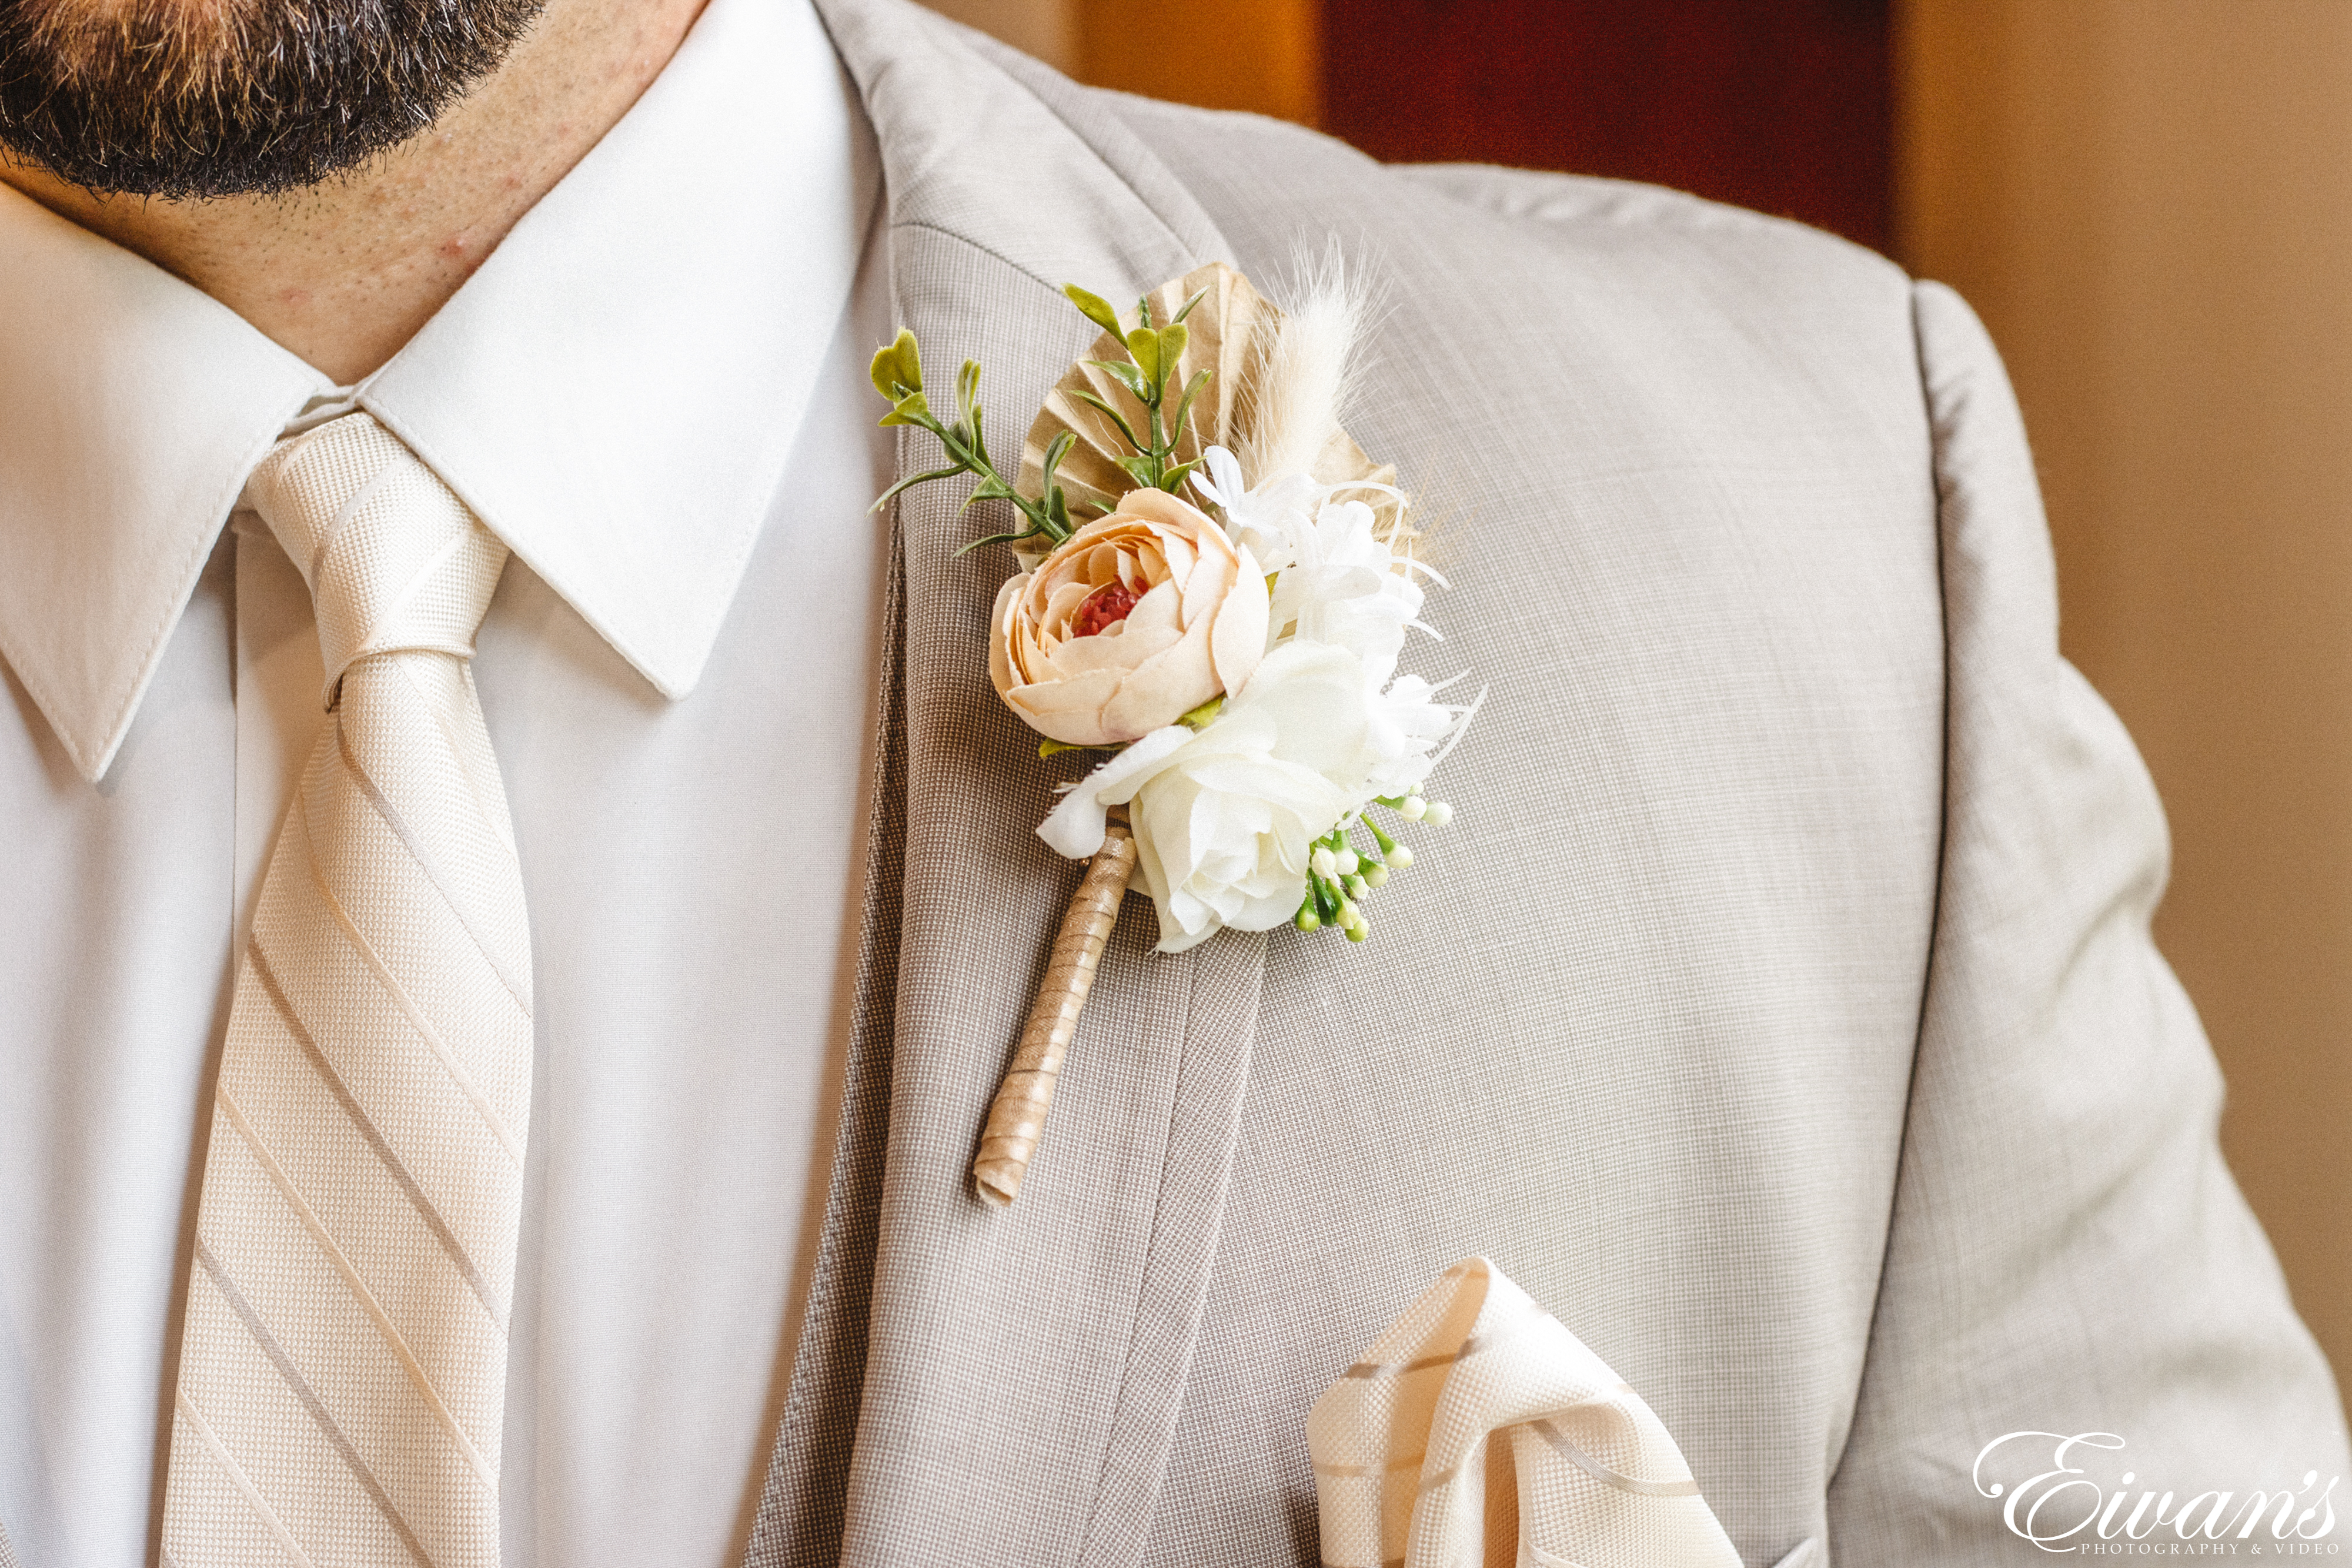 Elegant Men's Wedding Boutonniere Pins - Distinguish Your Style